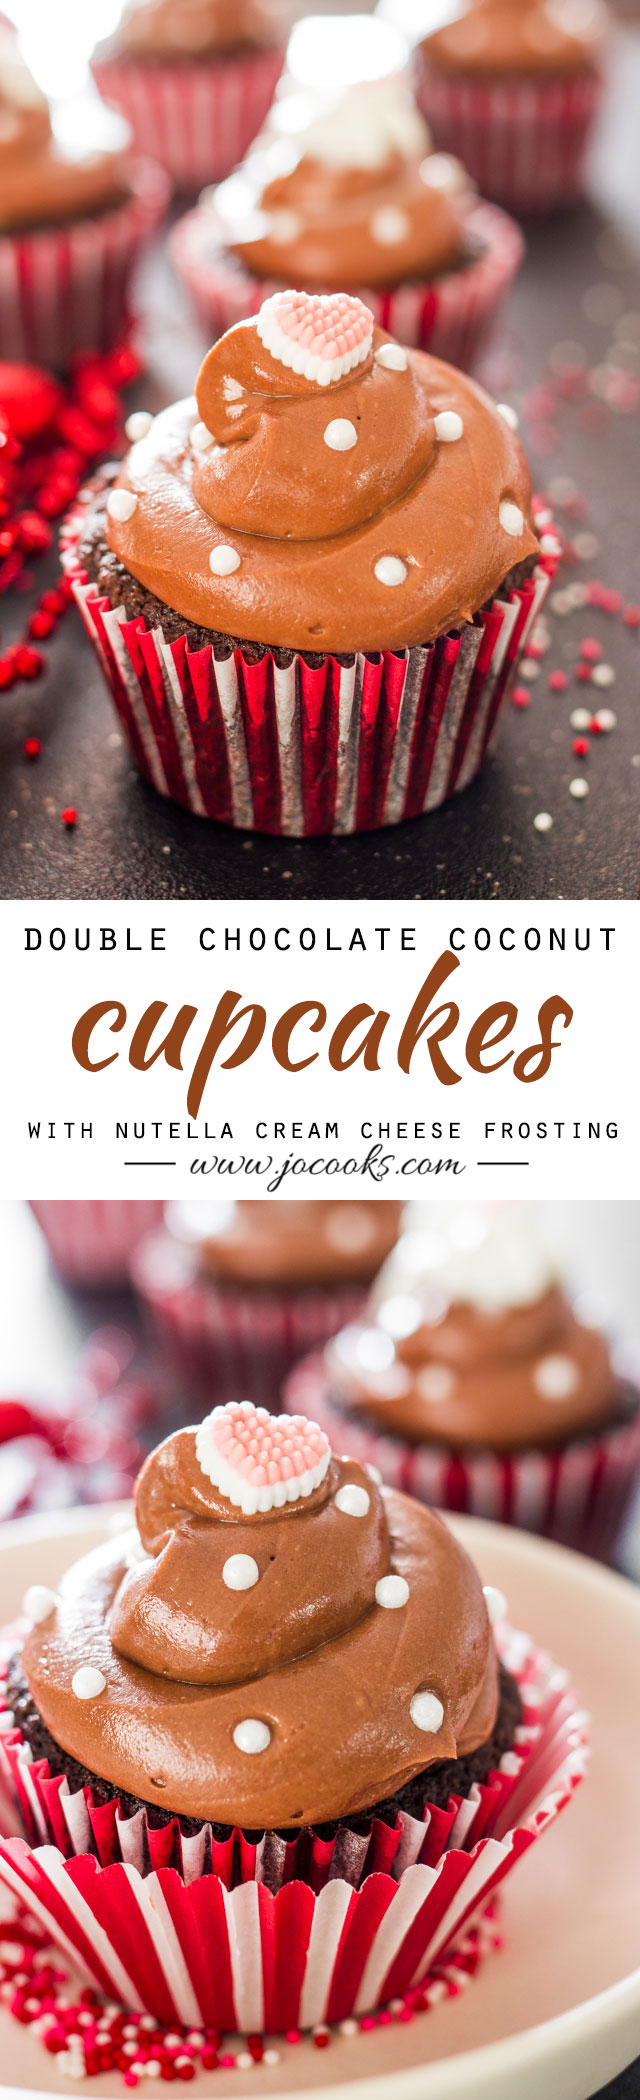 5 Photos of Nutella Cream Cheese Cupcakes